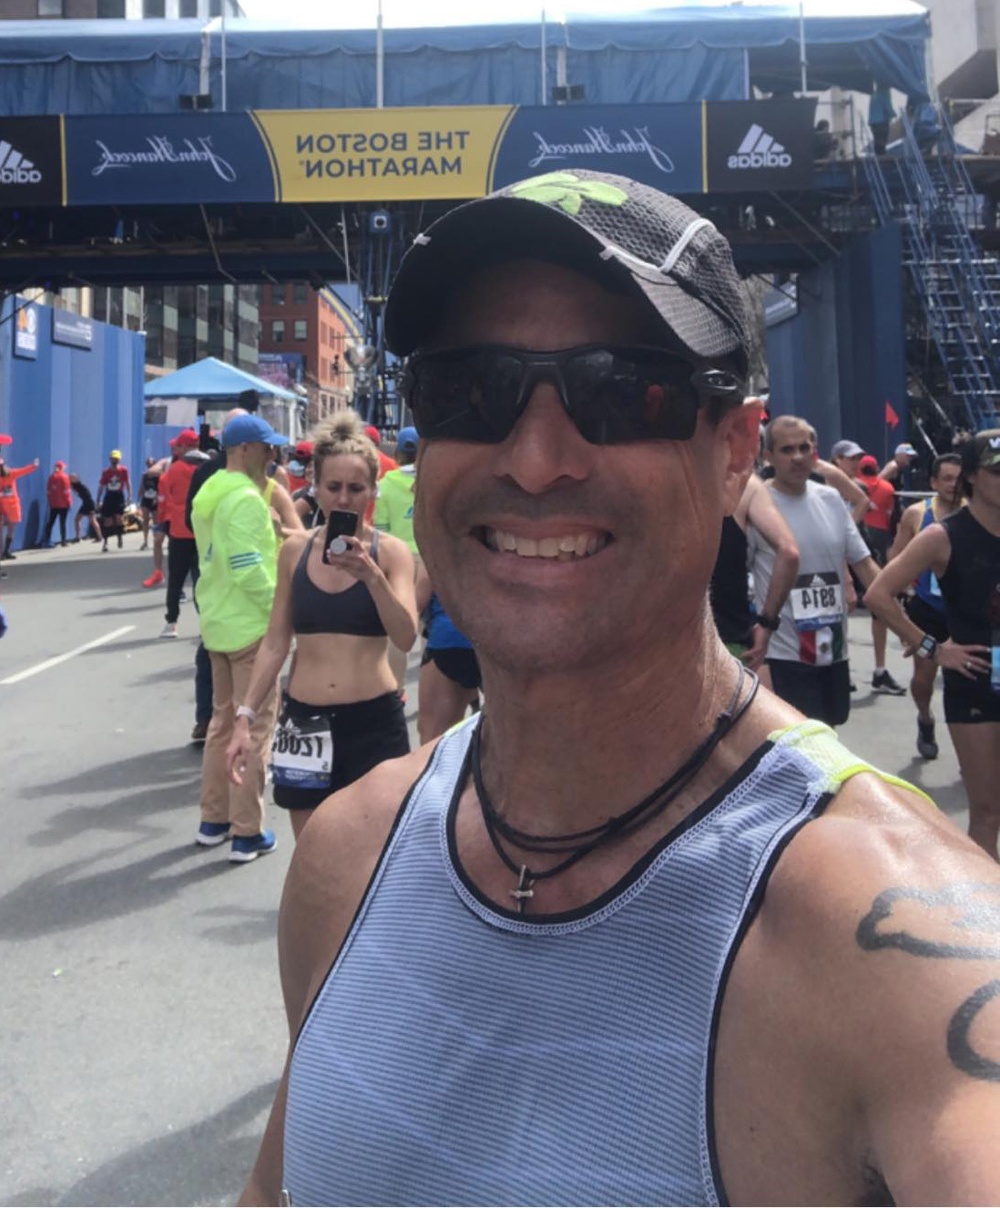 NCO takes Boston Marathon experience to VNG running team